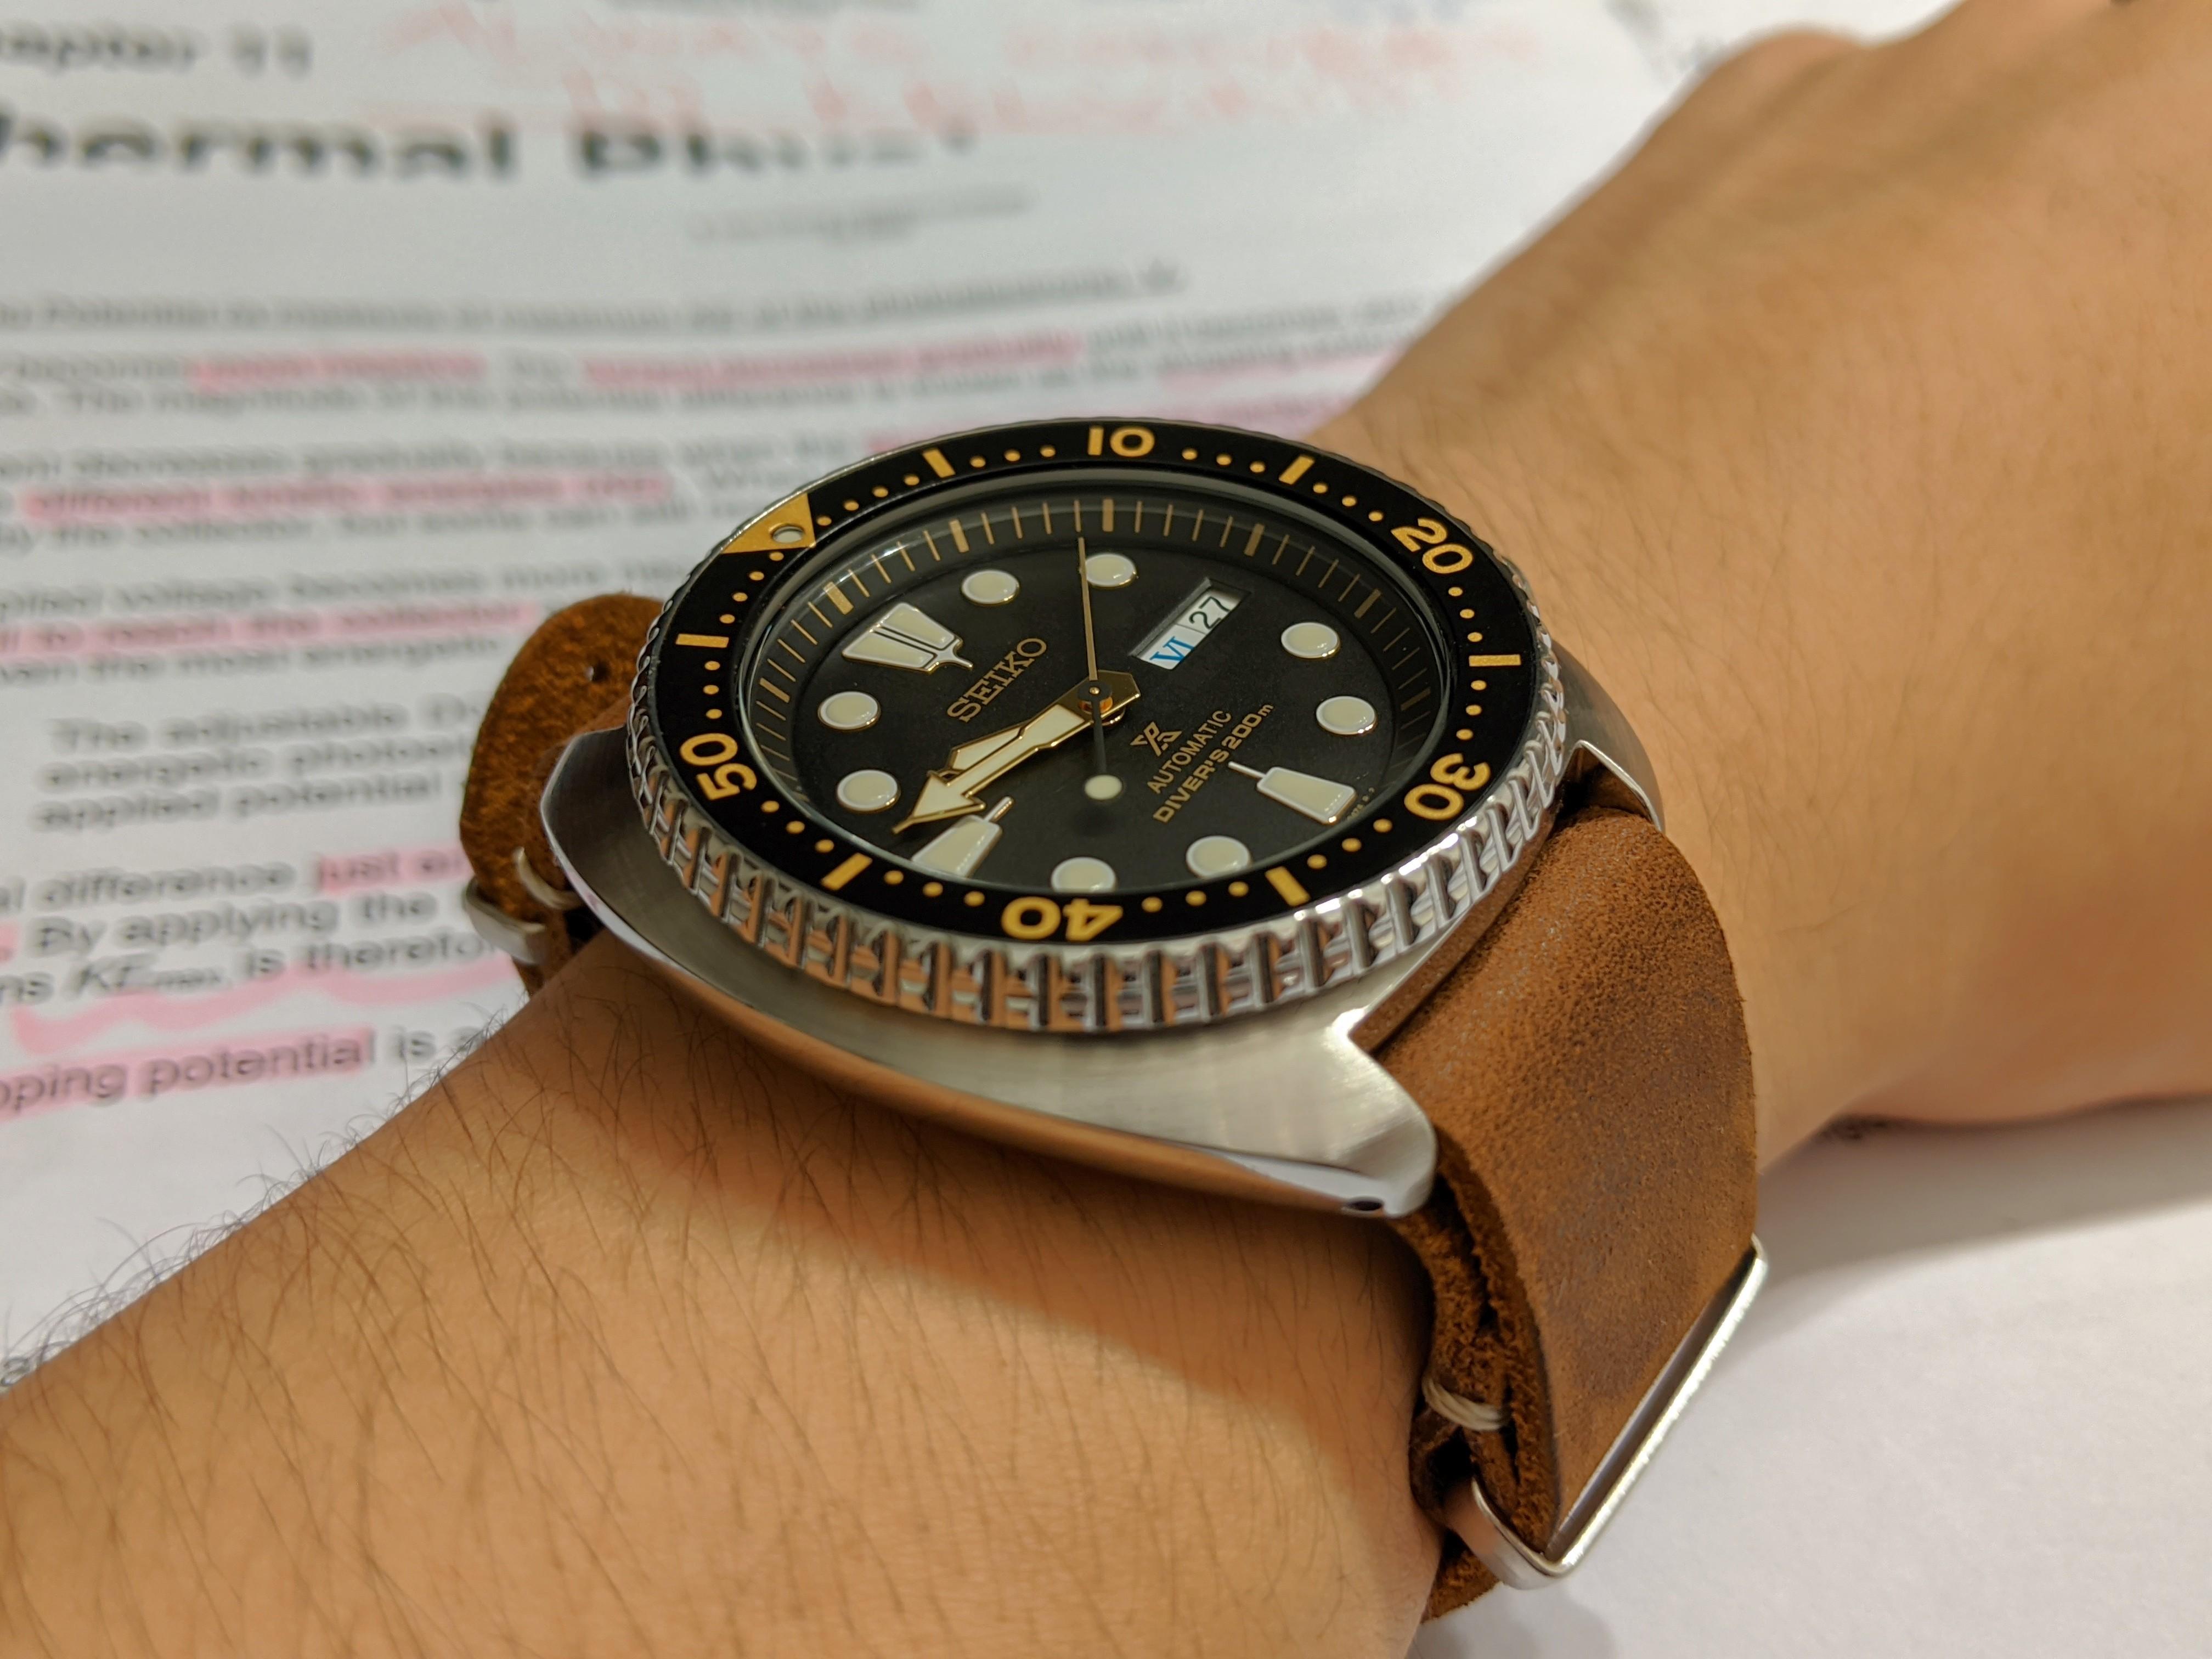 Seiko Golden Turtle SRP775K1 with shark mesh bracelet, Luxury